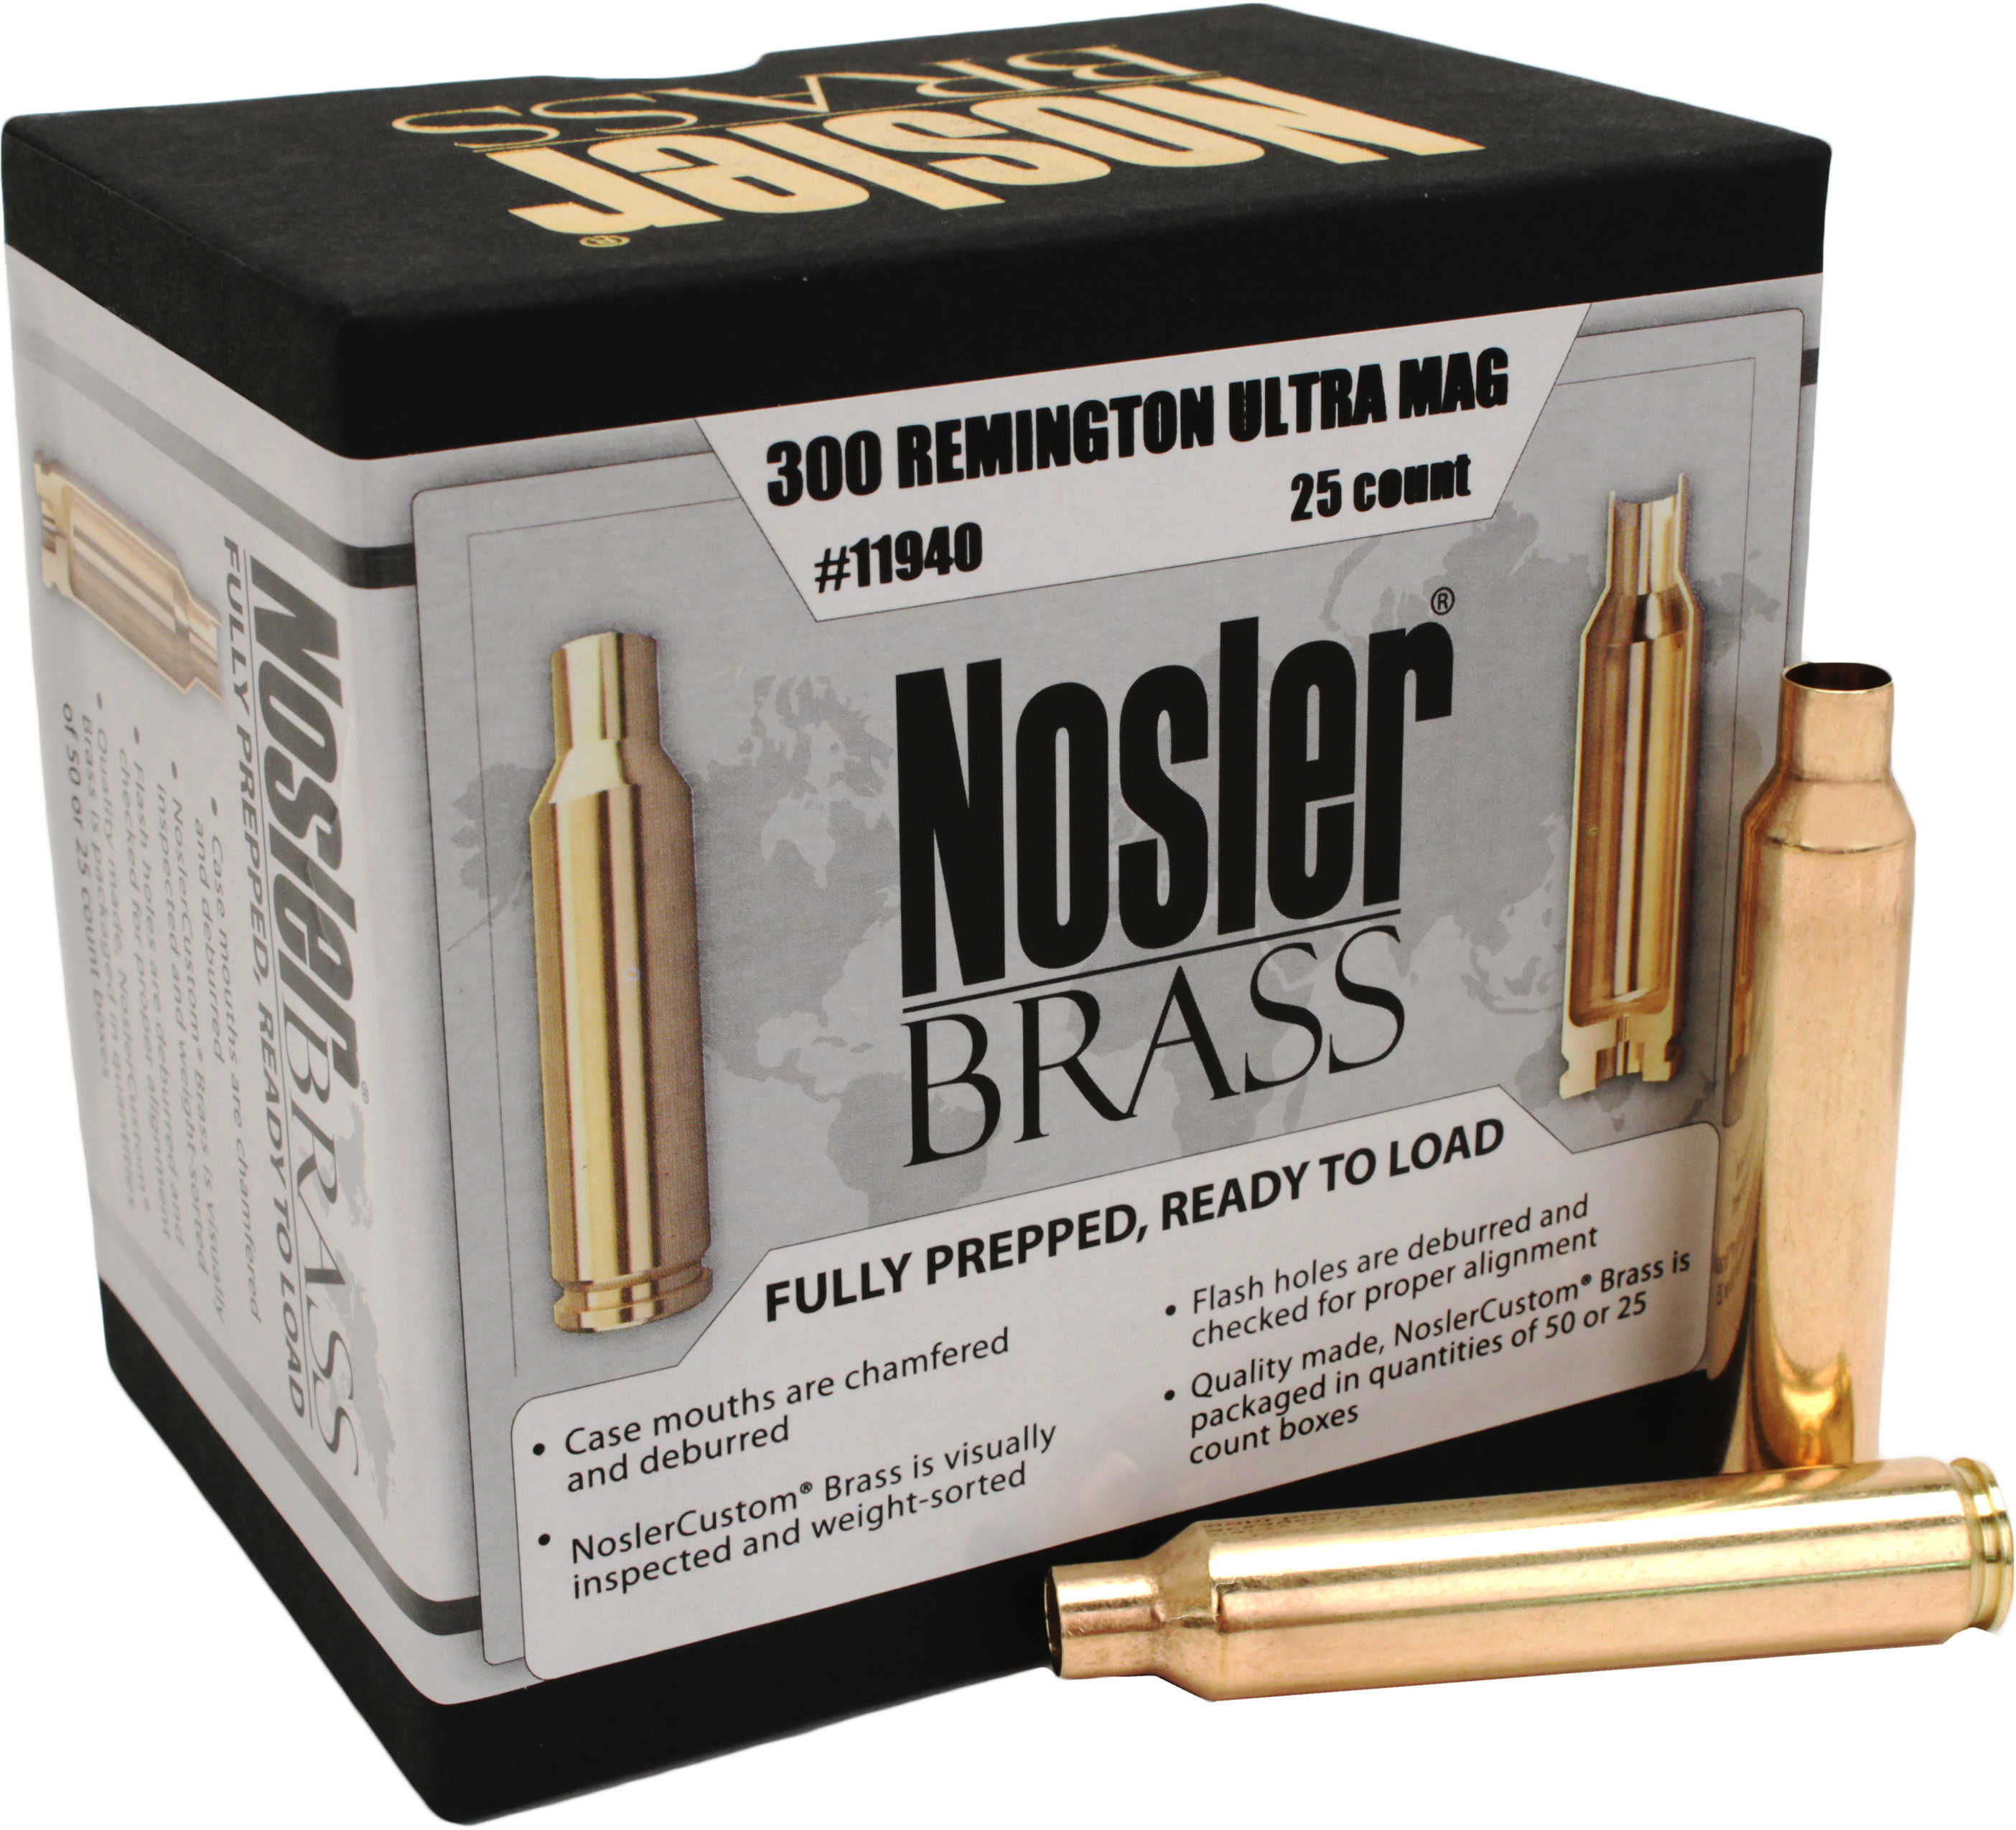 Nosler Brass 300 Remington Ultra Magnum (Per 25) Md: 11940 - 11060741